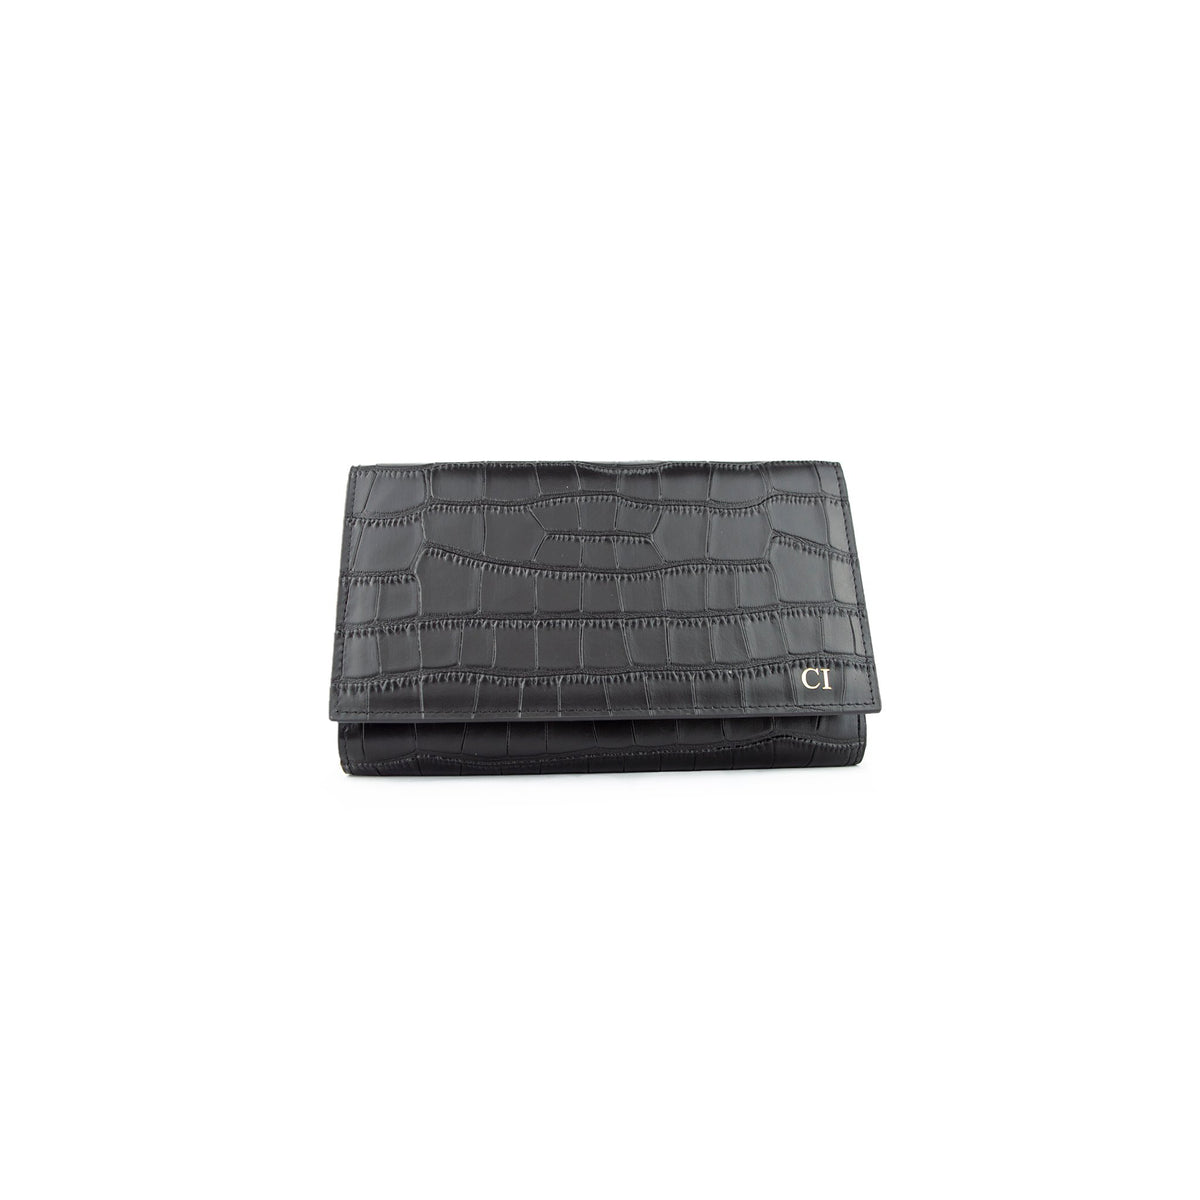 Personalised Black Monogrammed Croc Effect Travel Document Holder / Clutch Bag